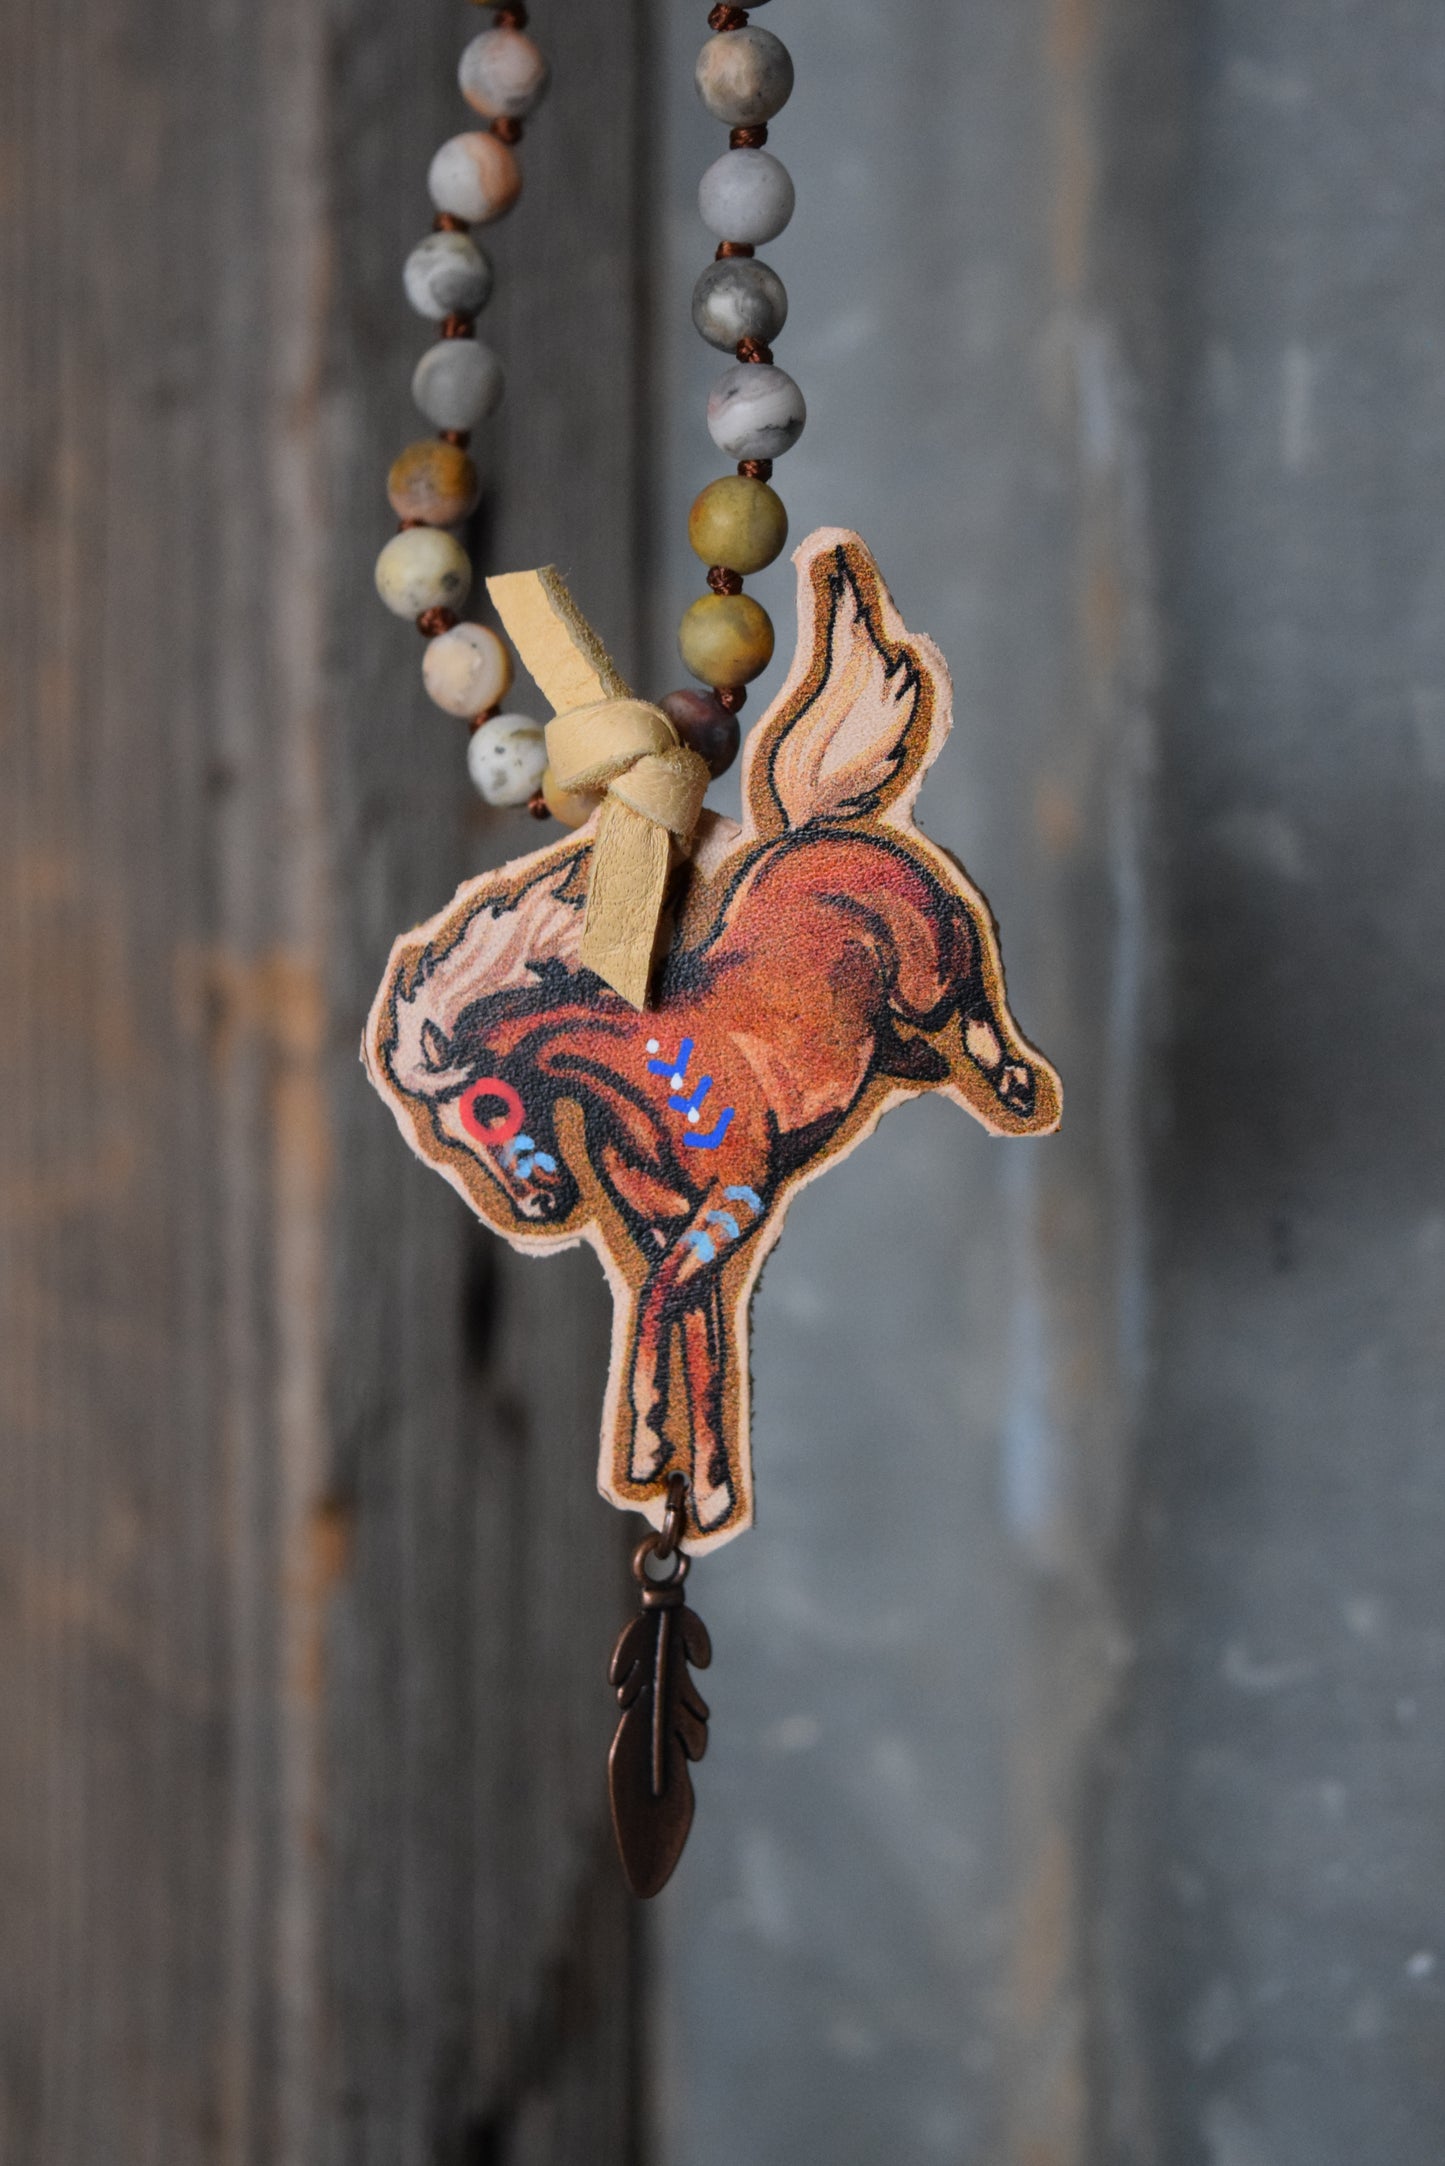 The Wild & Free Pony Necklace